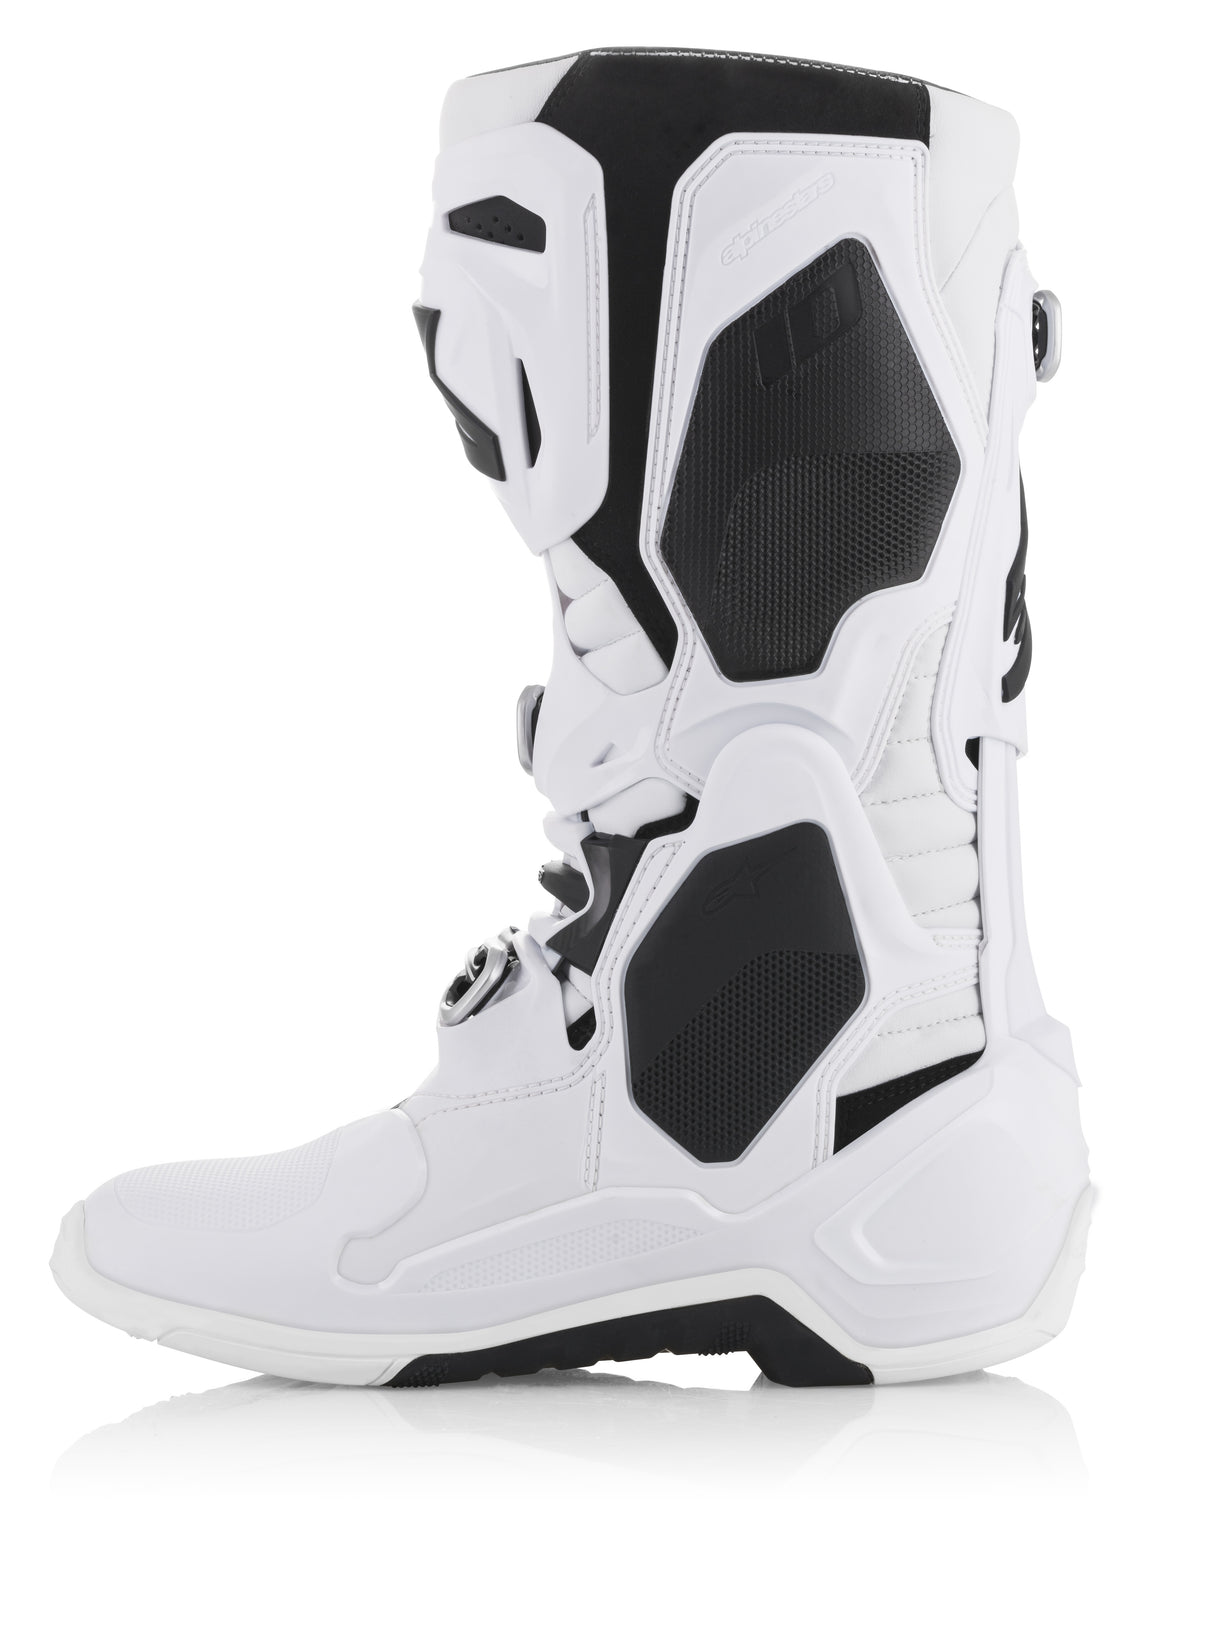 Tech 10 Boots White Size 13